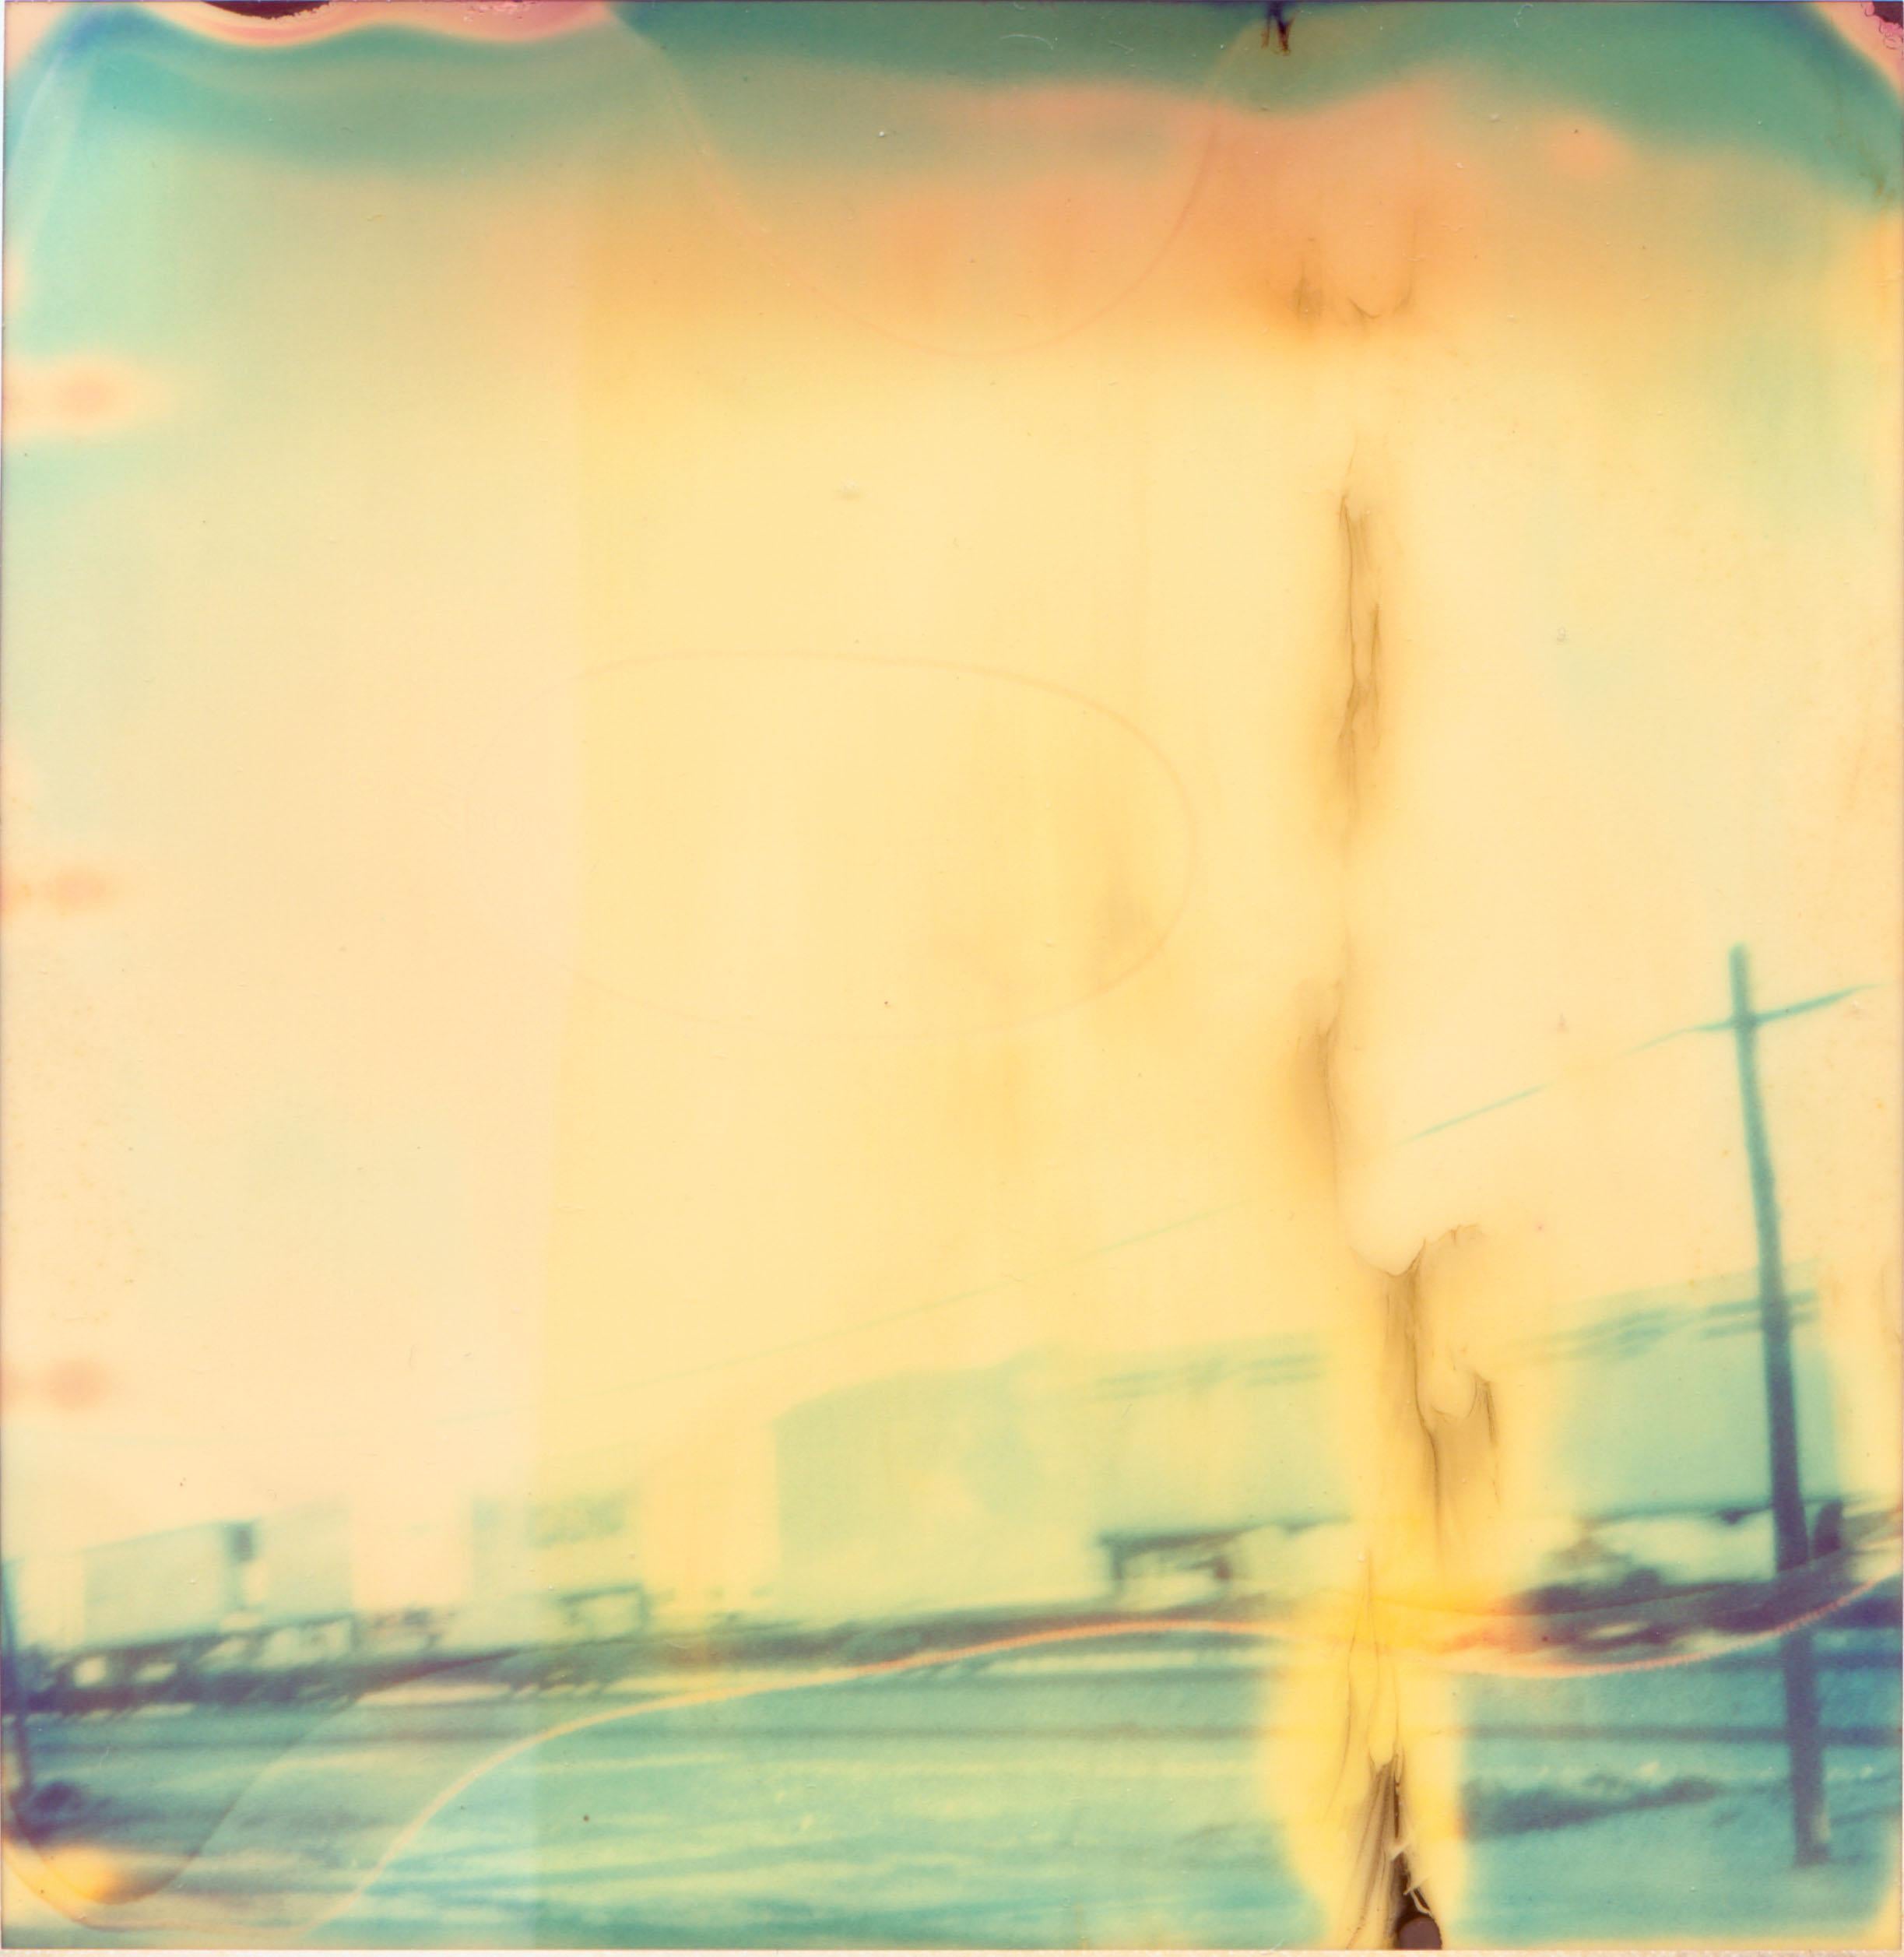 Stefanie Schneider Color Photograph - Untitled (Traintracks) - based on a Polaroid